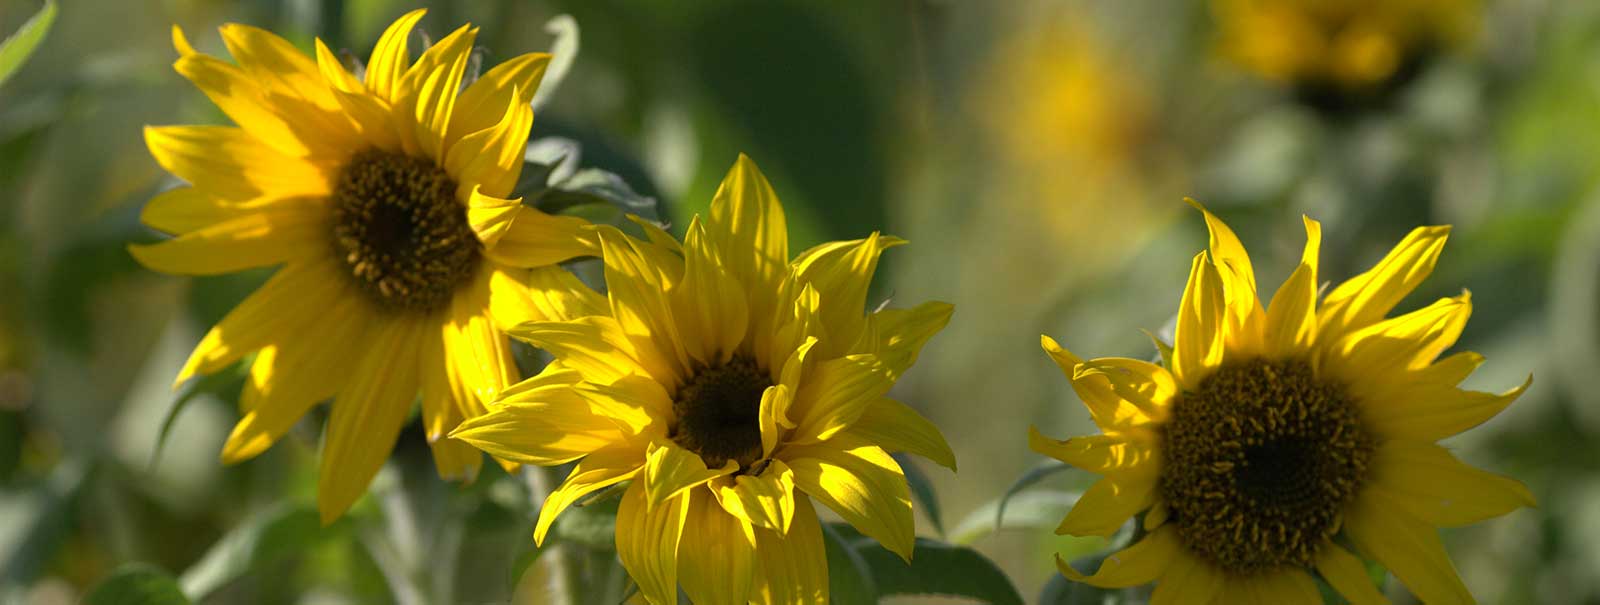 Sunflower - Helianthus annuus L.